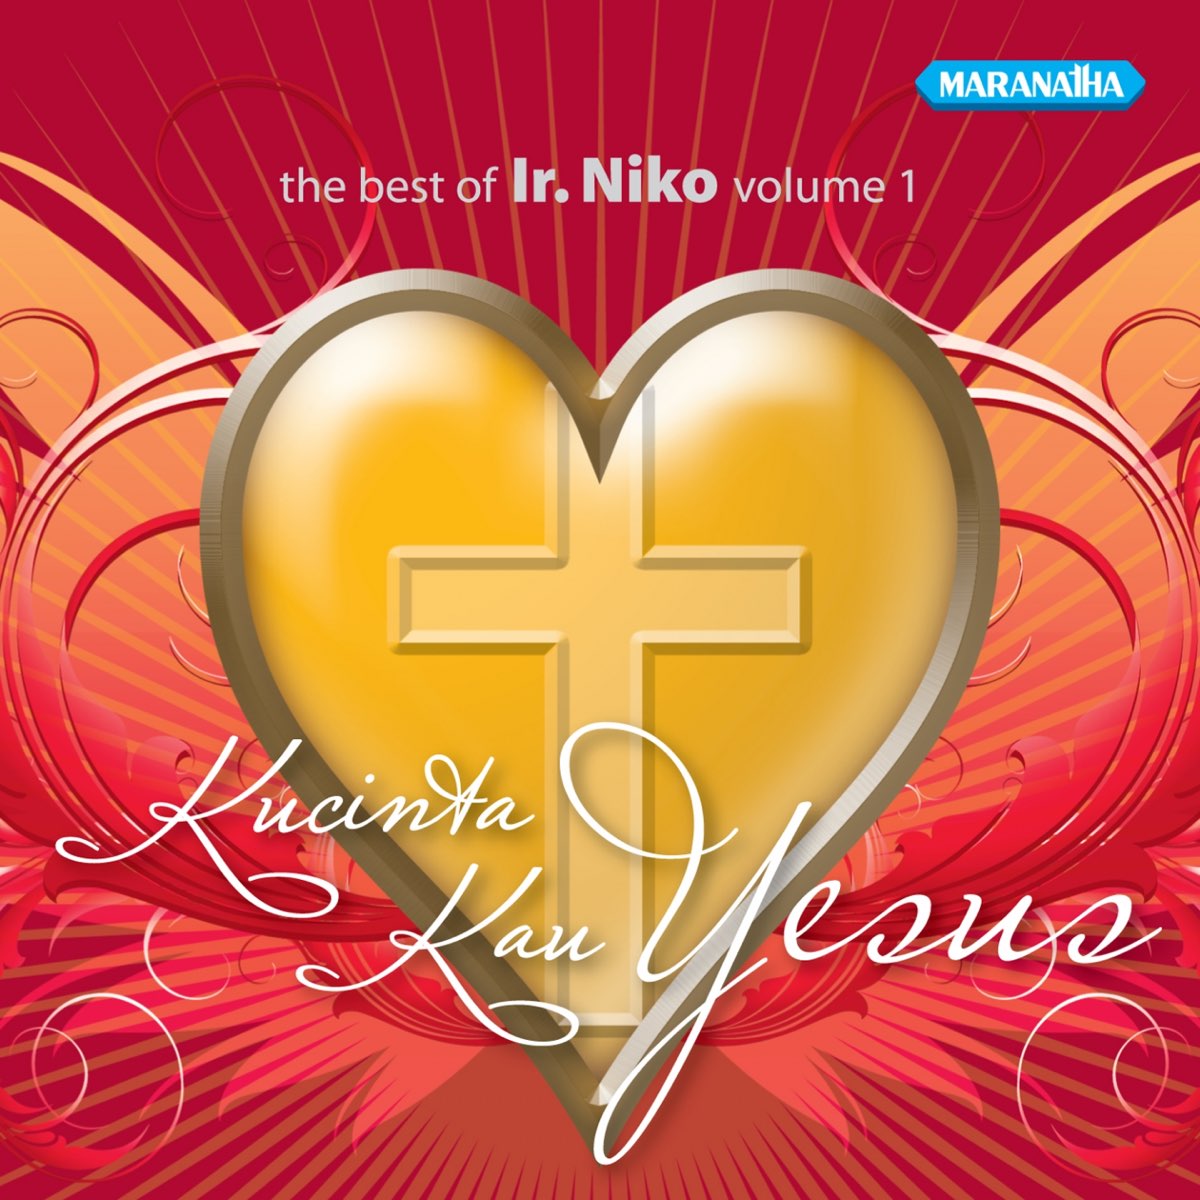 The Best of I.R. Niko, Vol. 1 - Album by Ir. Niko - Apple Music